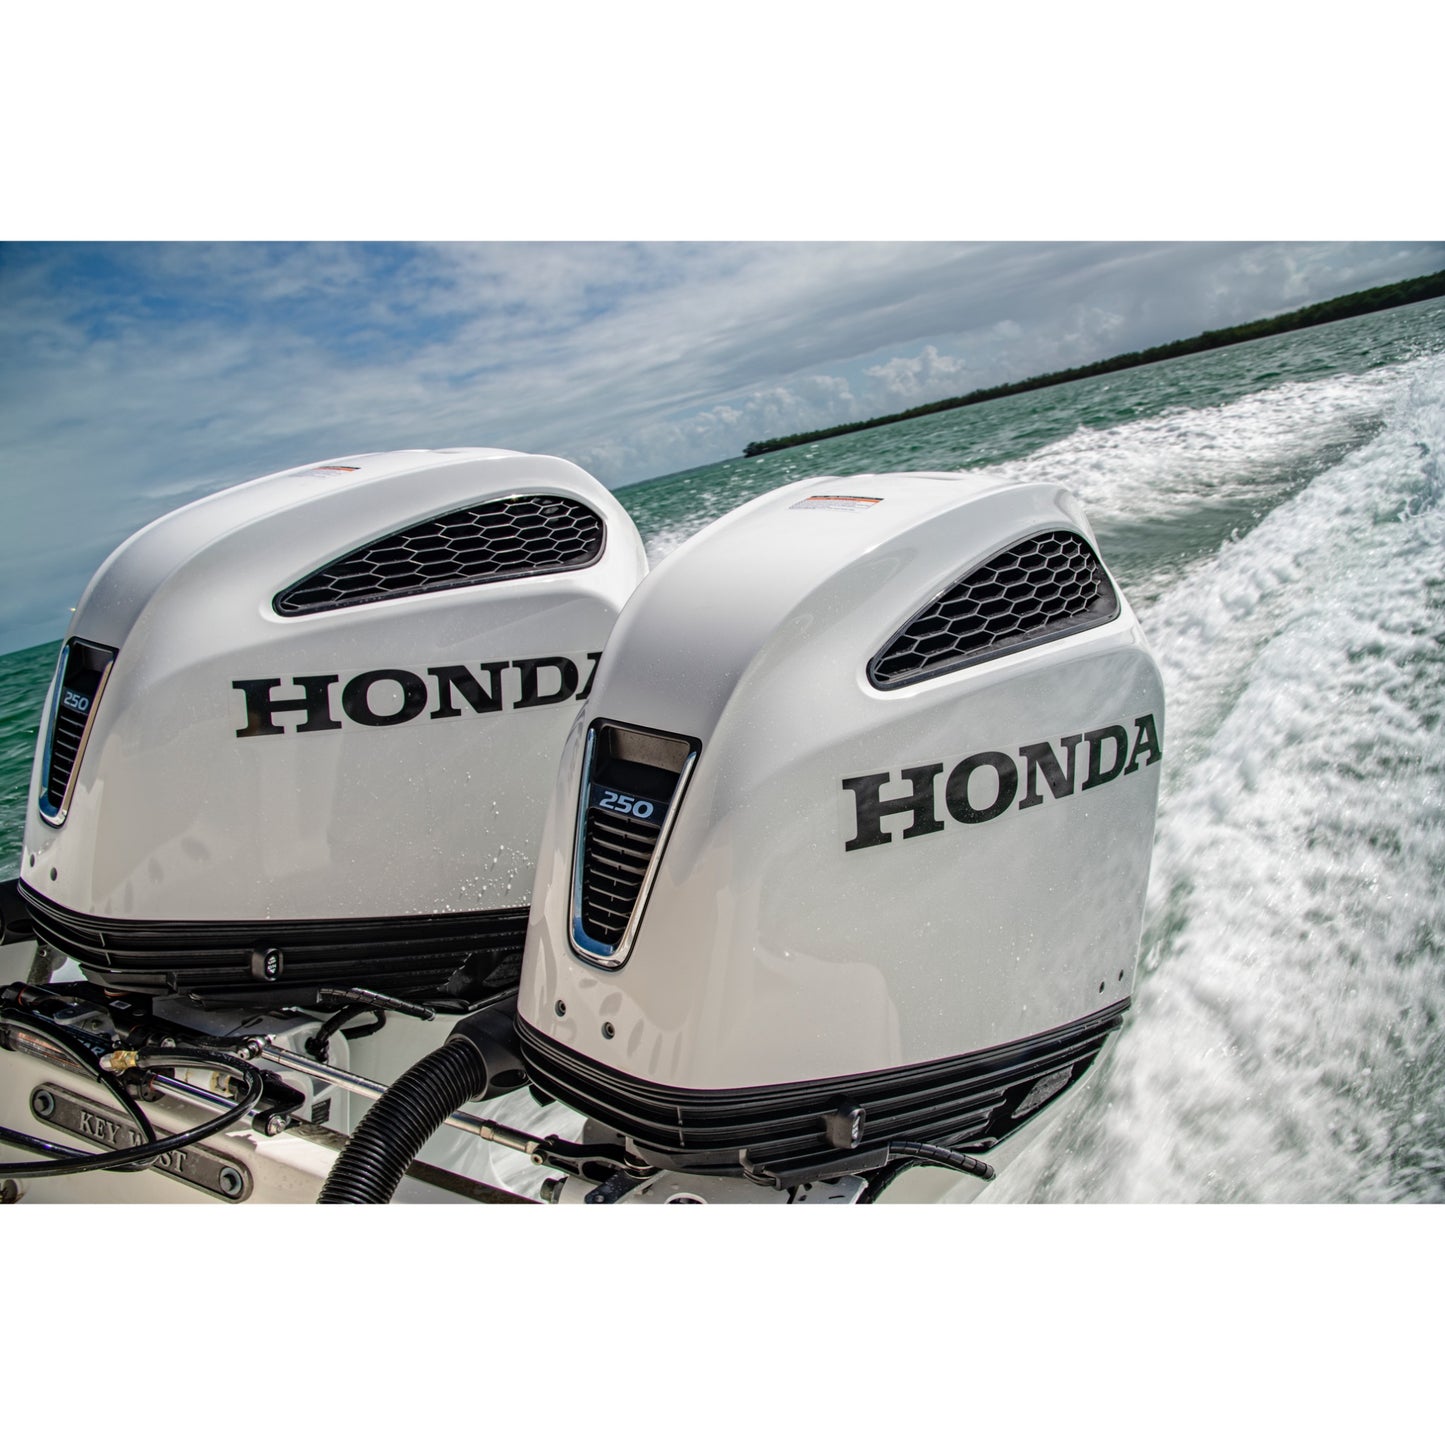 Honda Marine Outboard | BF225 | Large-Size | 4-stroke